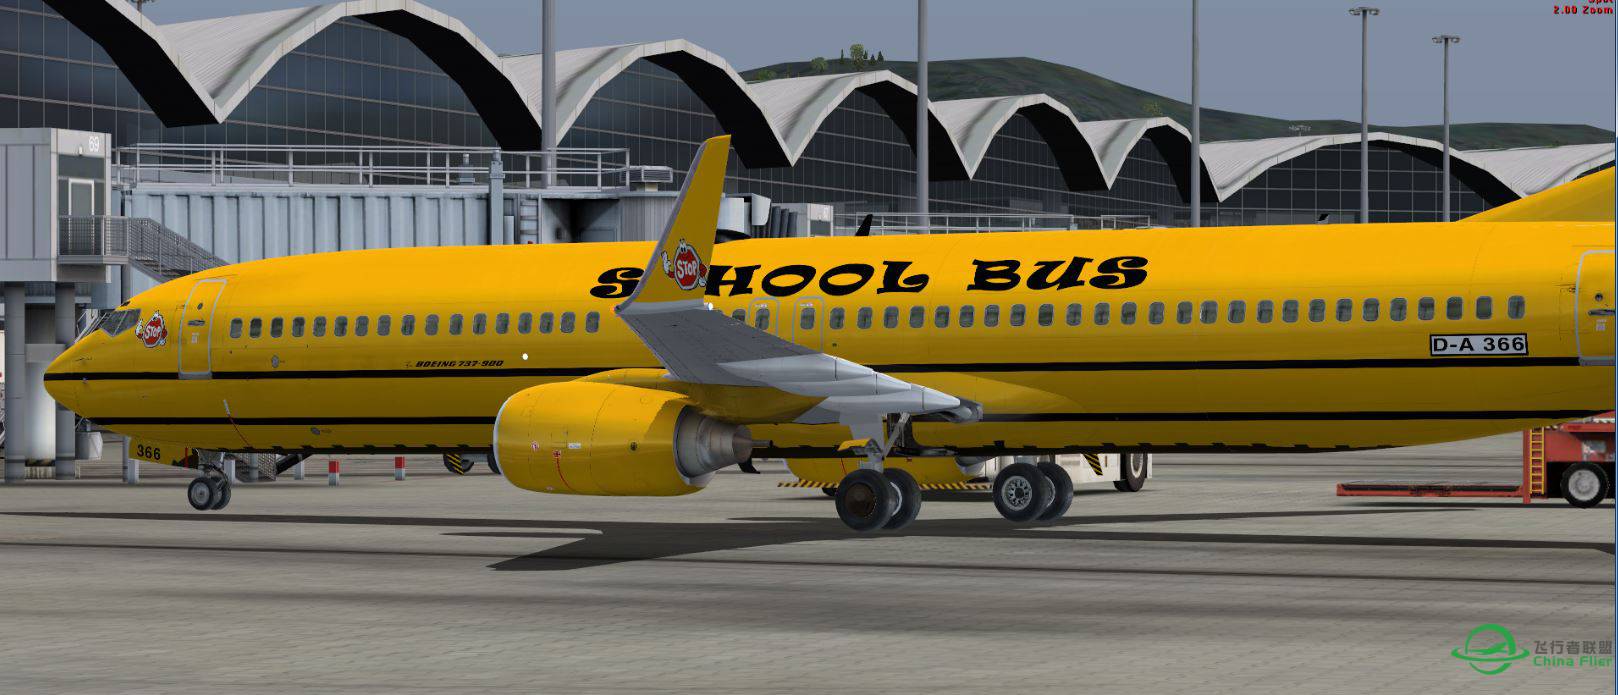 B737 900 school plane-1166 